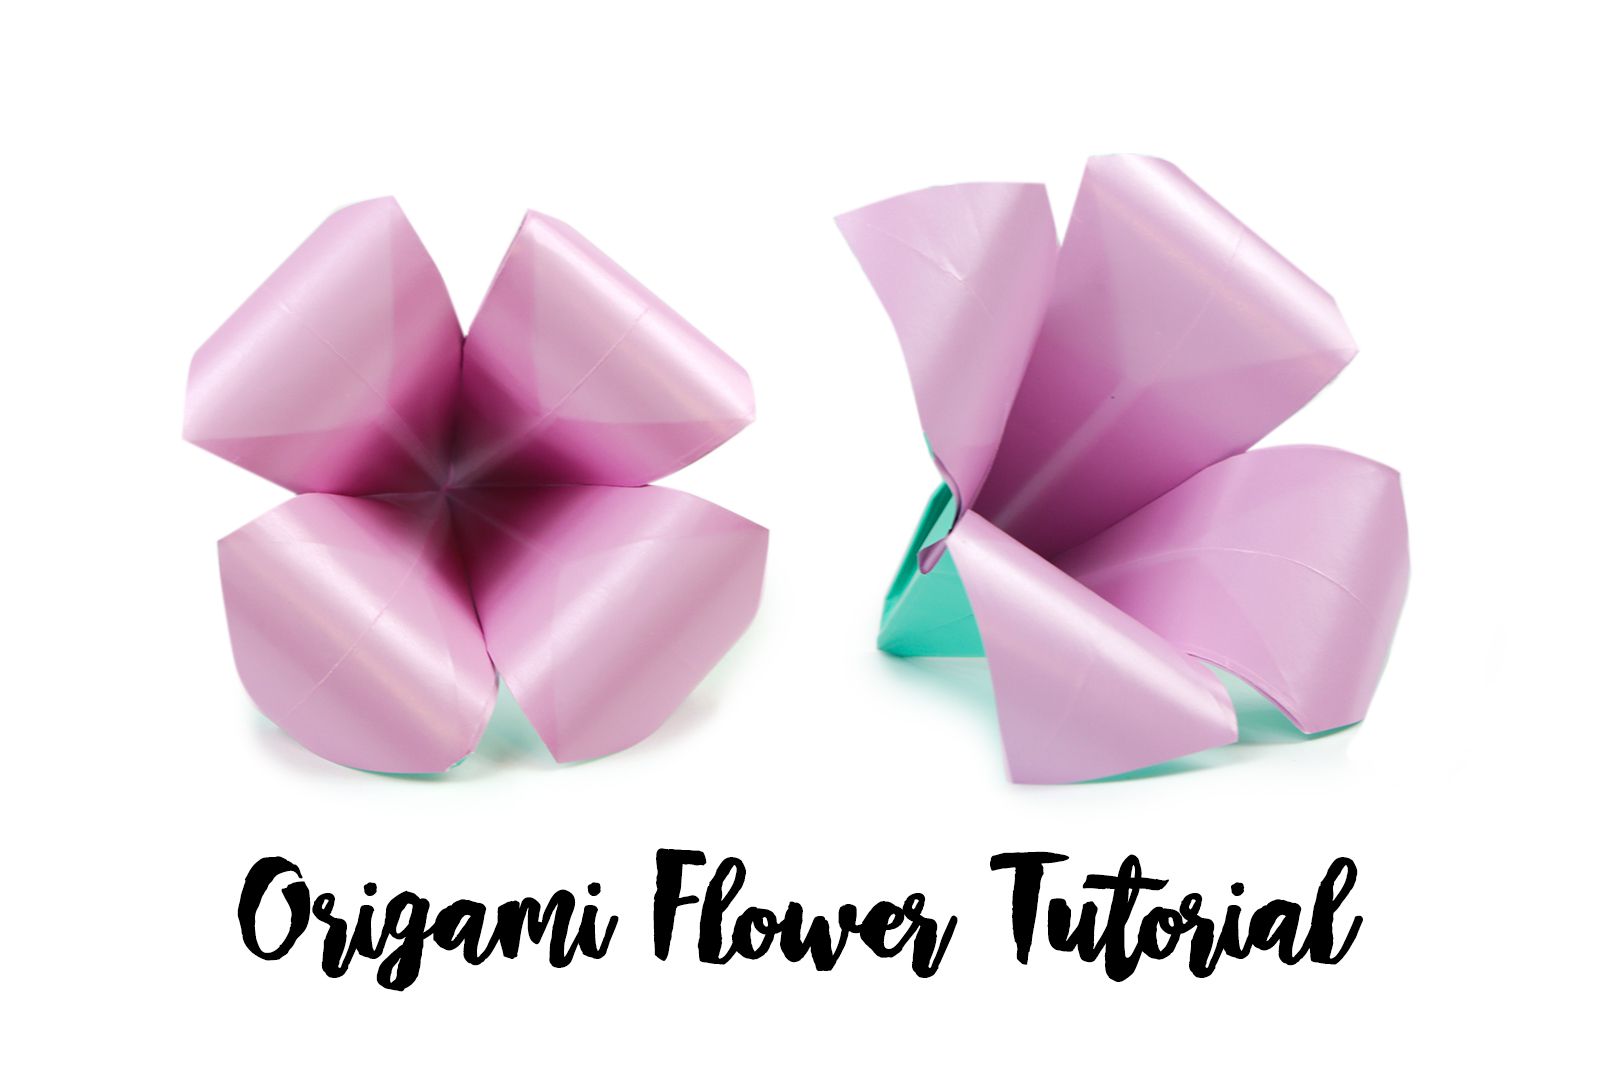 easy origami flower instructions for kids